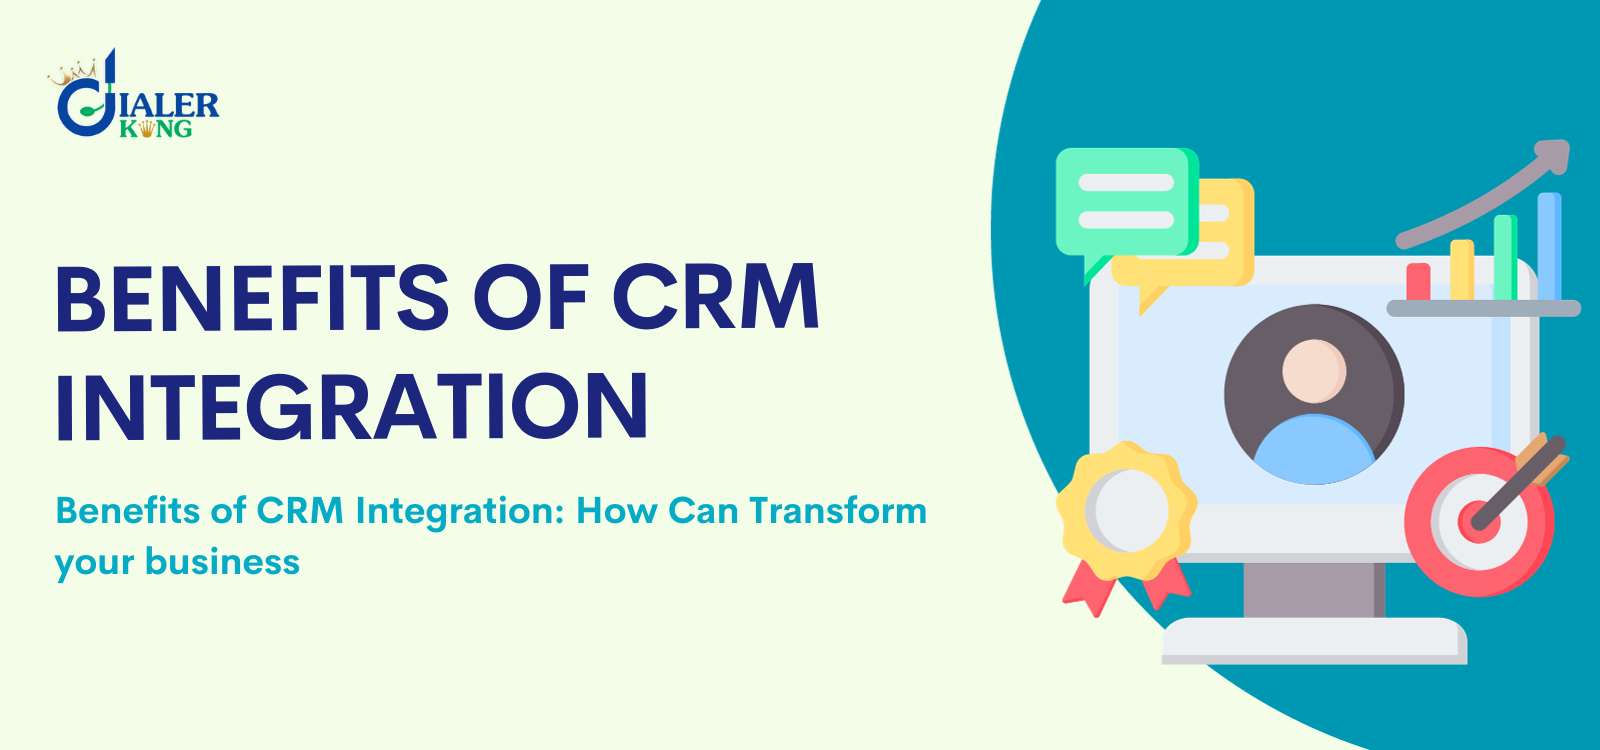 Benefits of CRM Integration